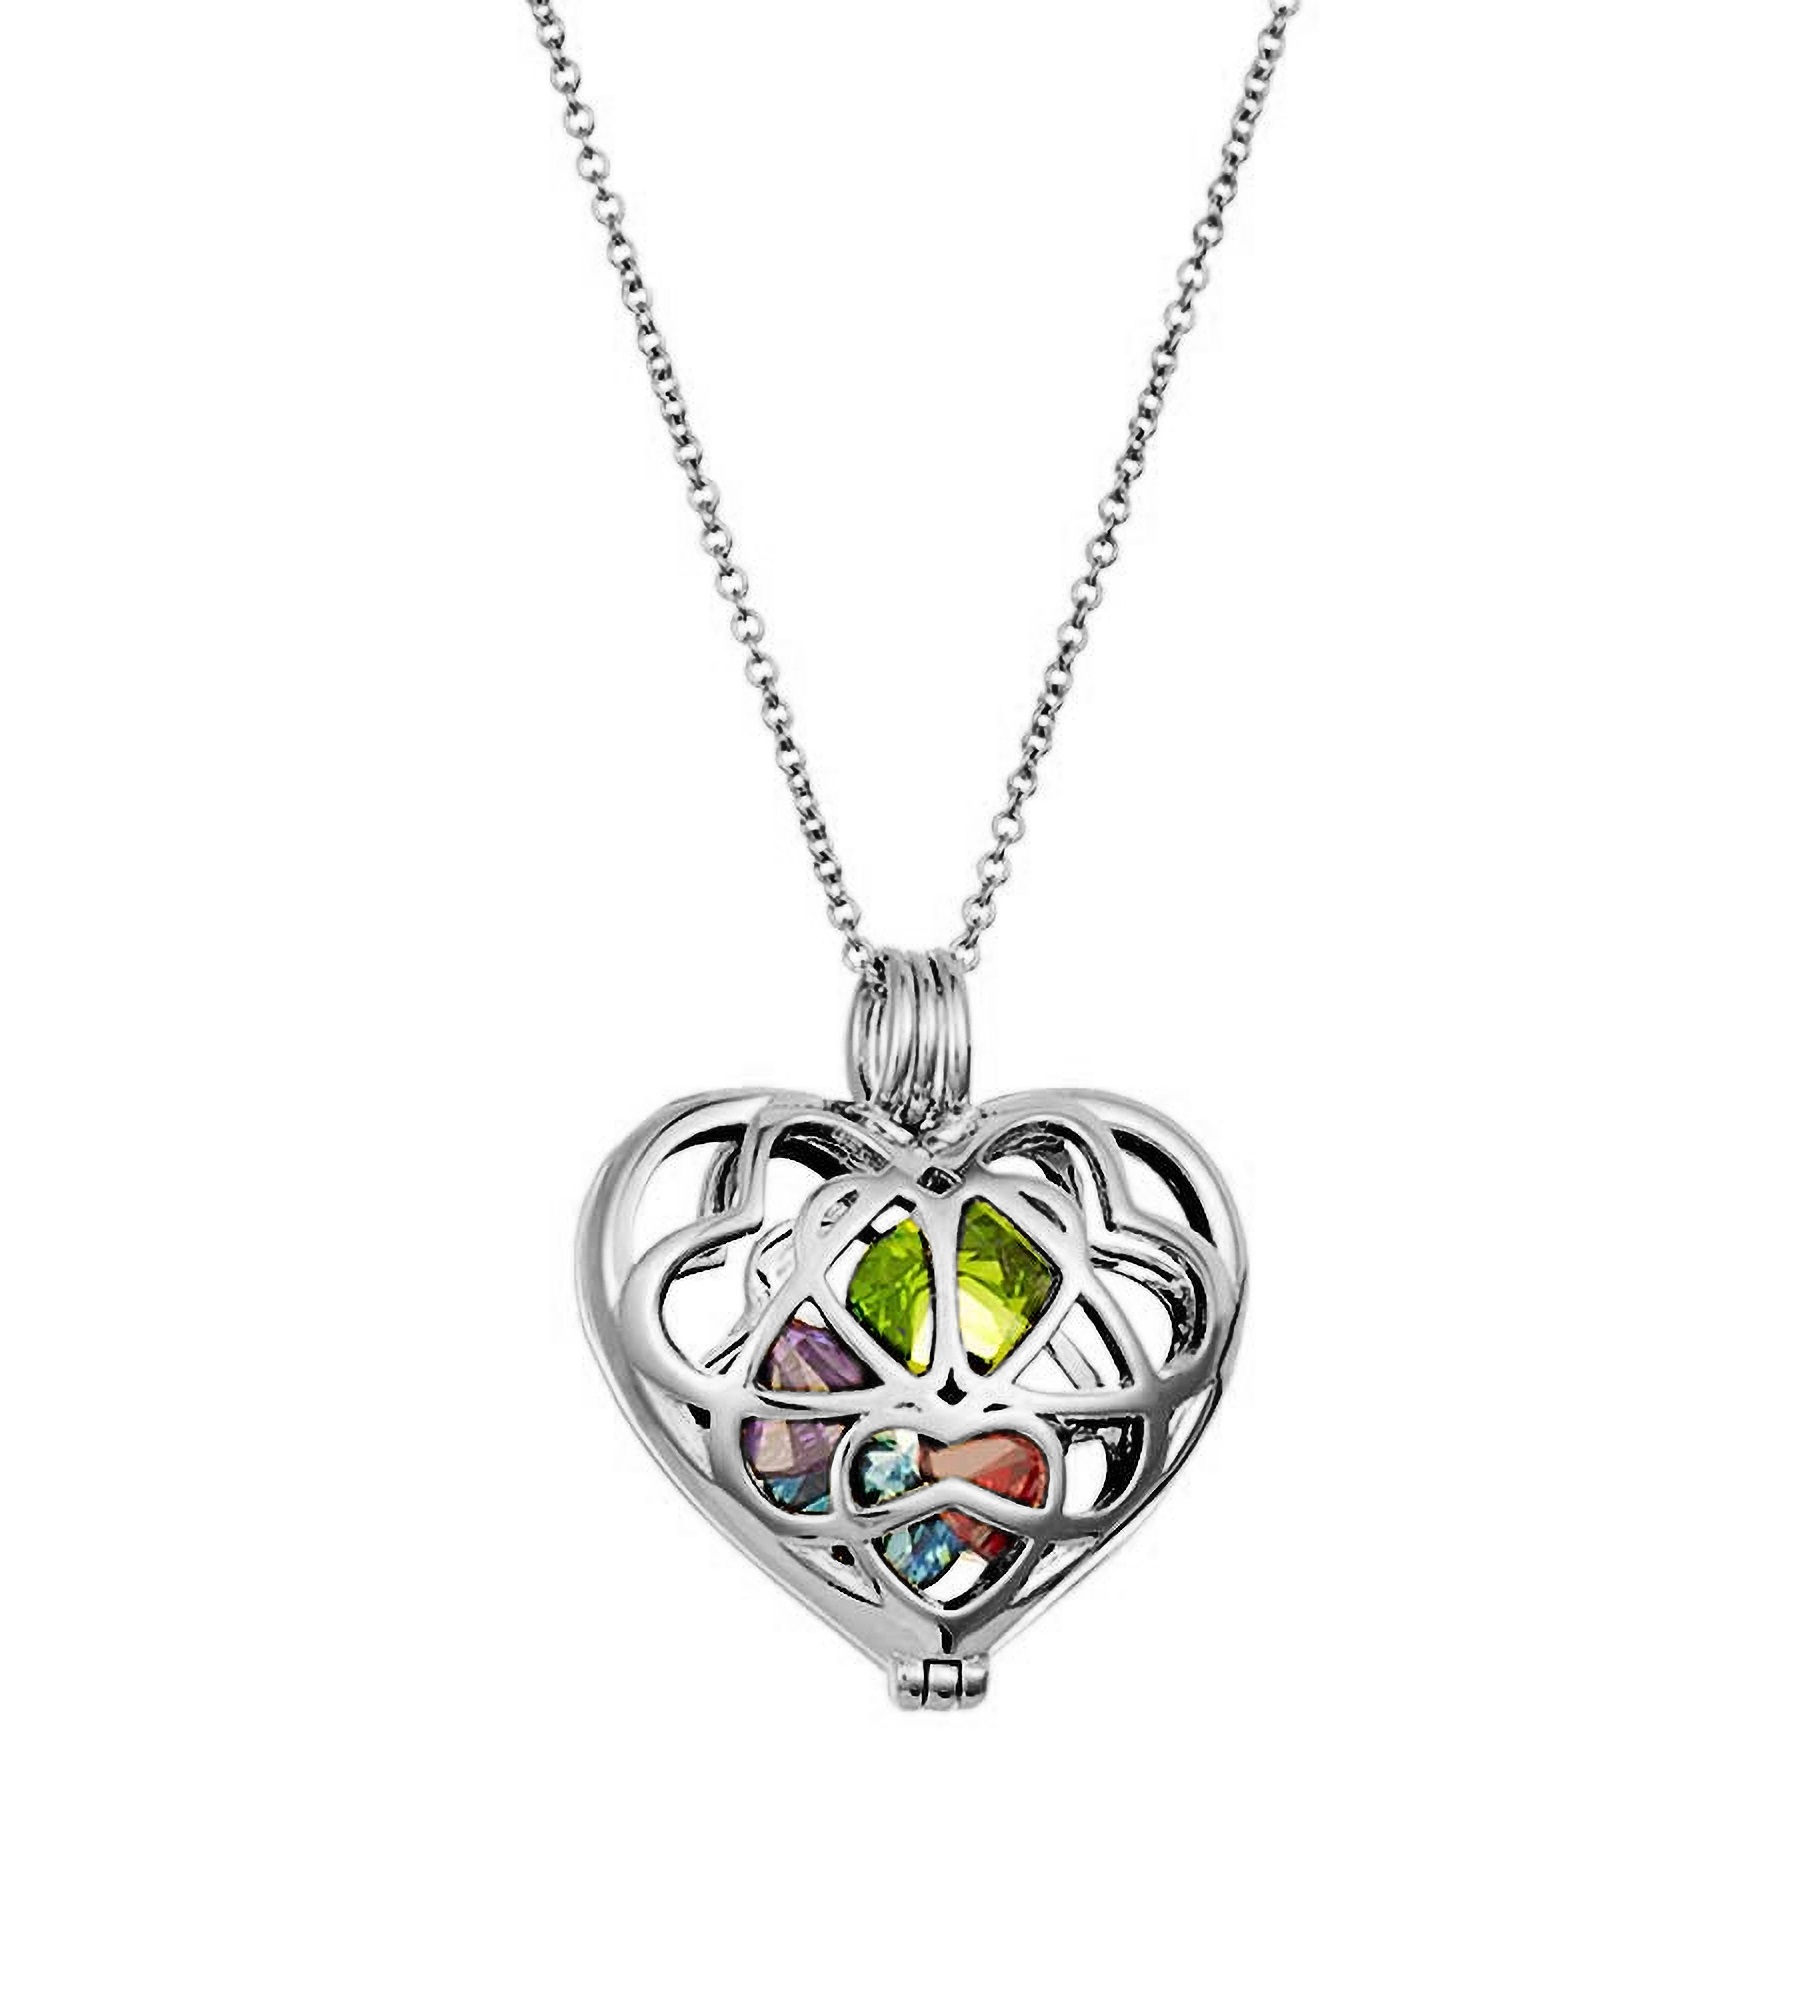 Personalized Interlocking Hearts with Birthstone Locket